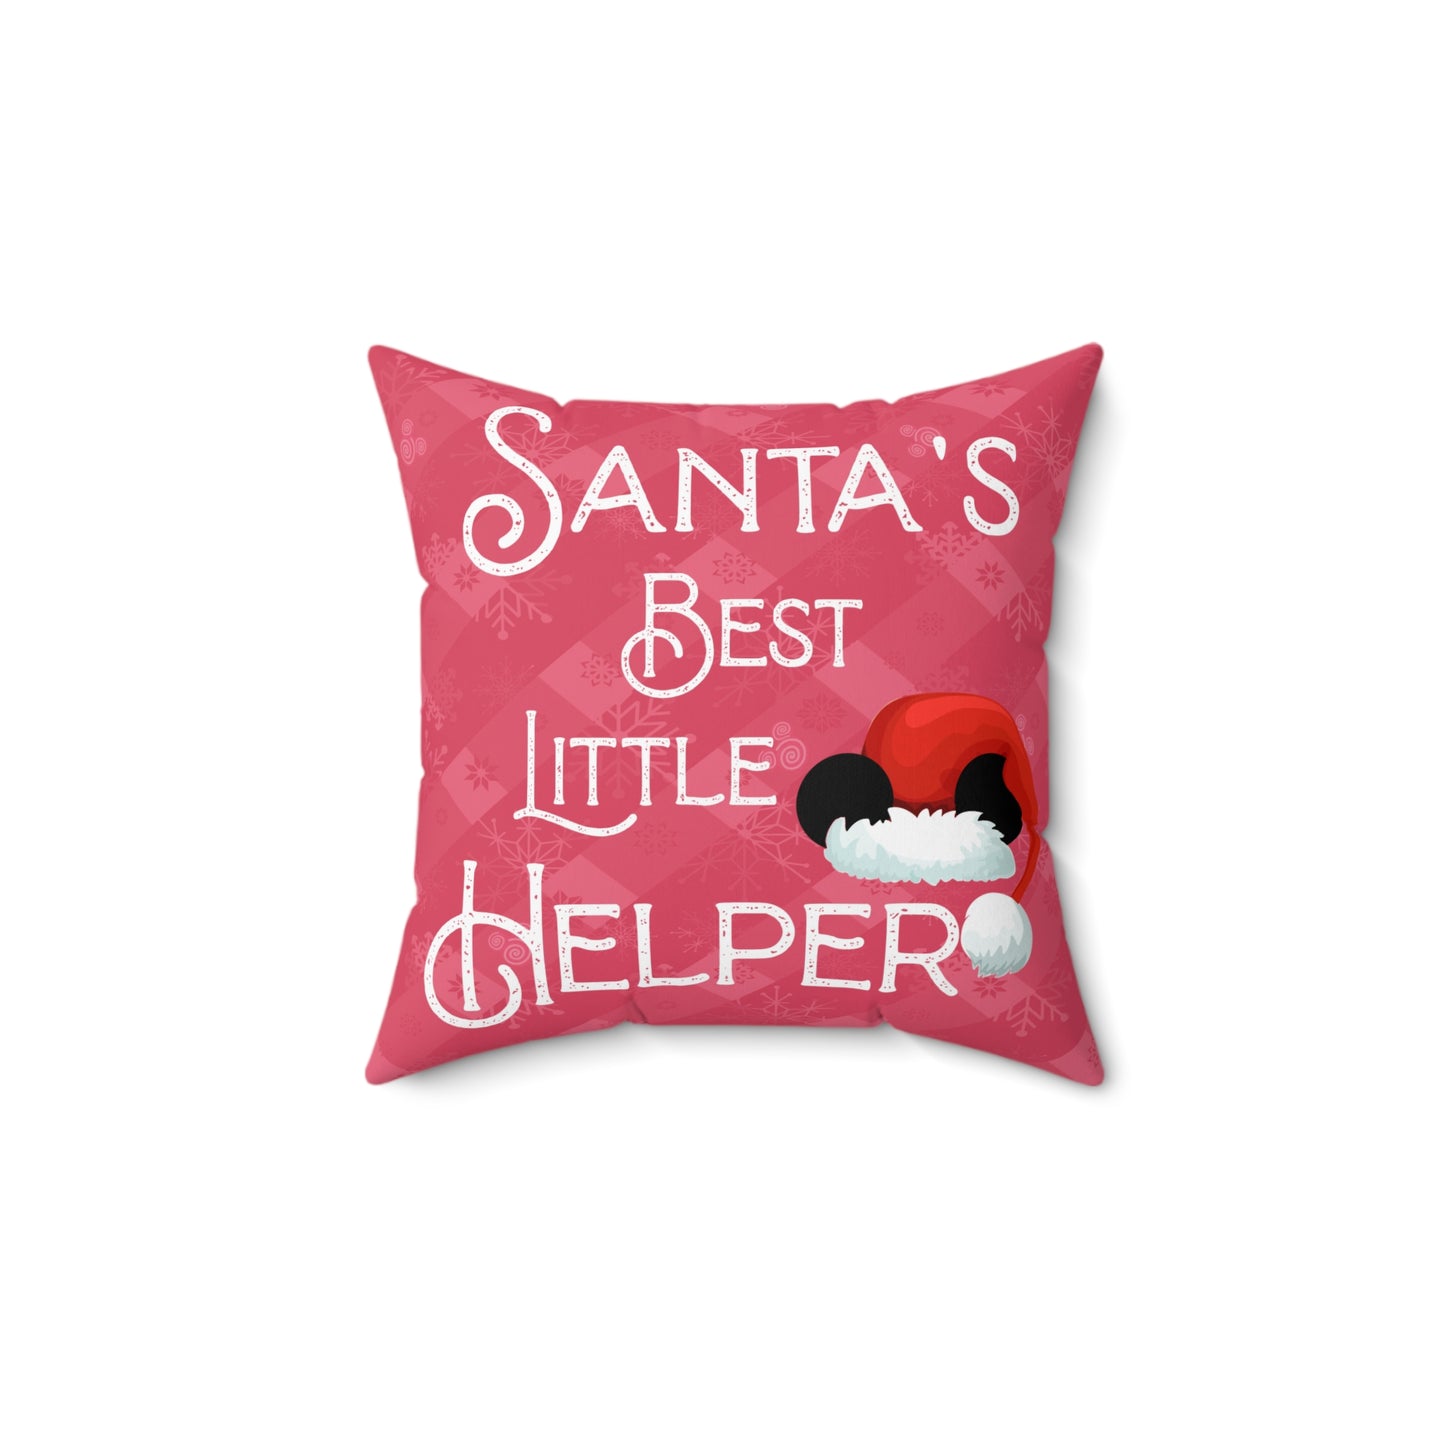 Santa's Helper - Square Pillow